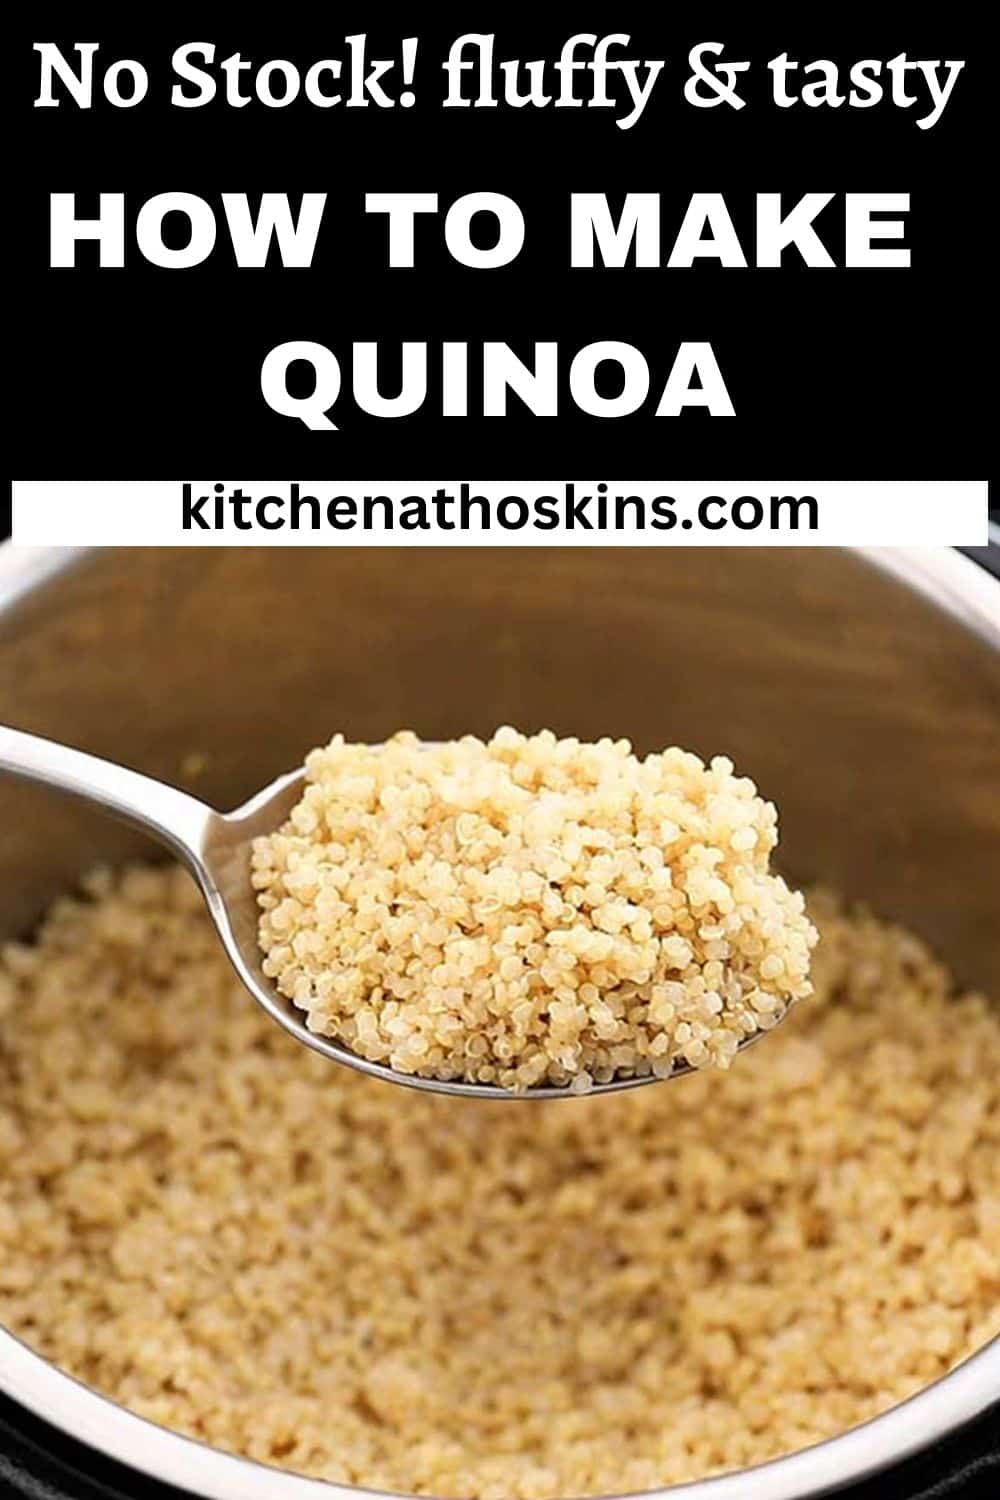 Instant Pot Quinoa | Kitchen At Hoskins